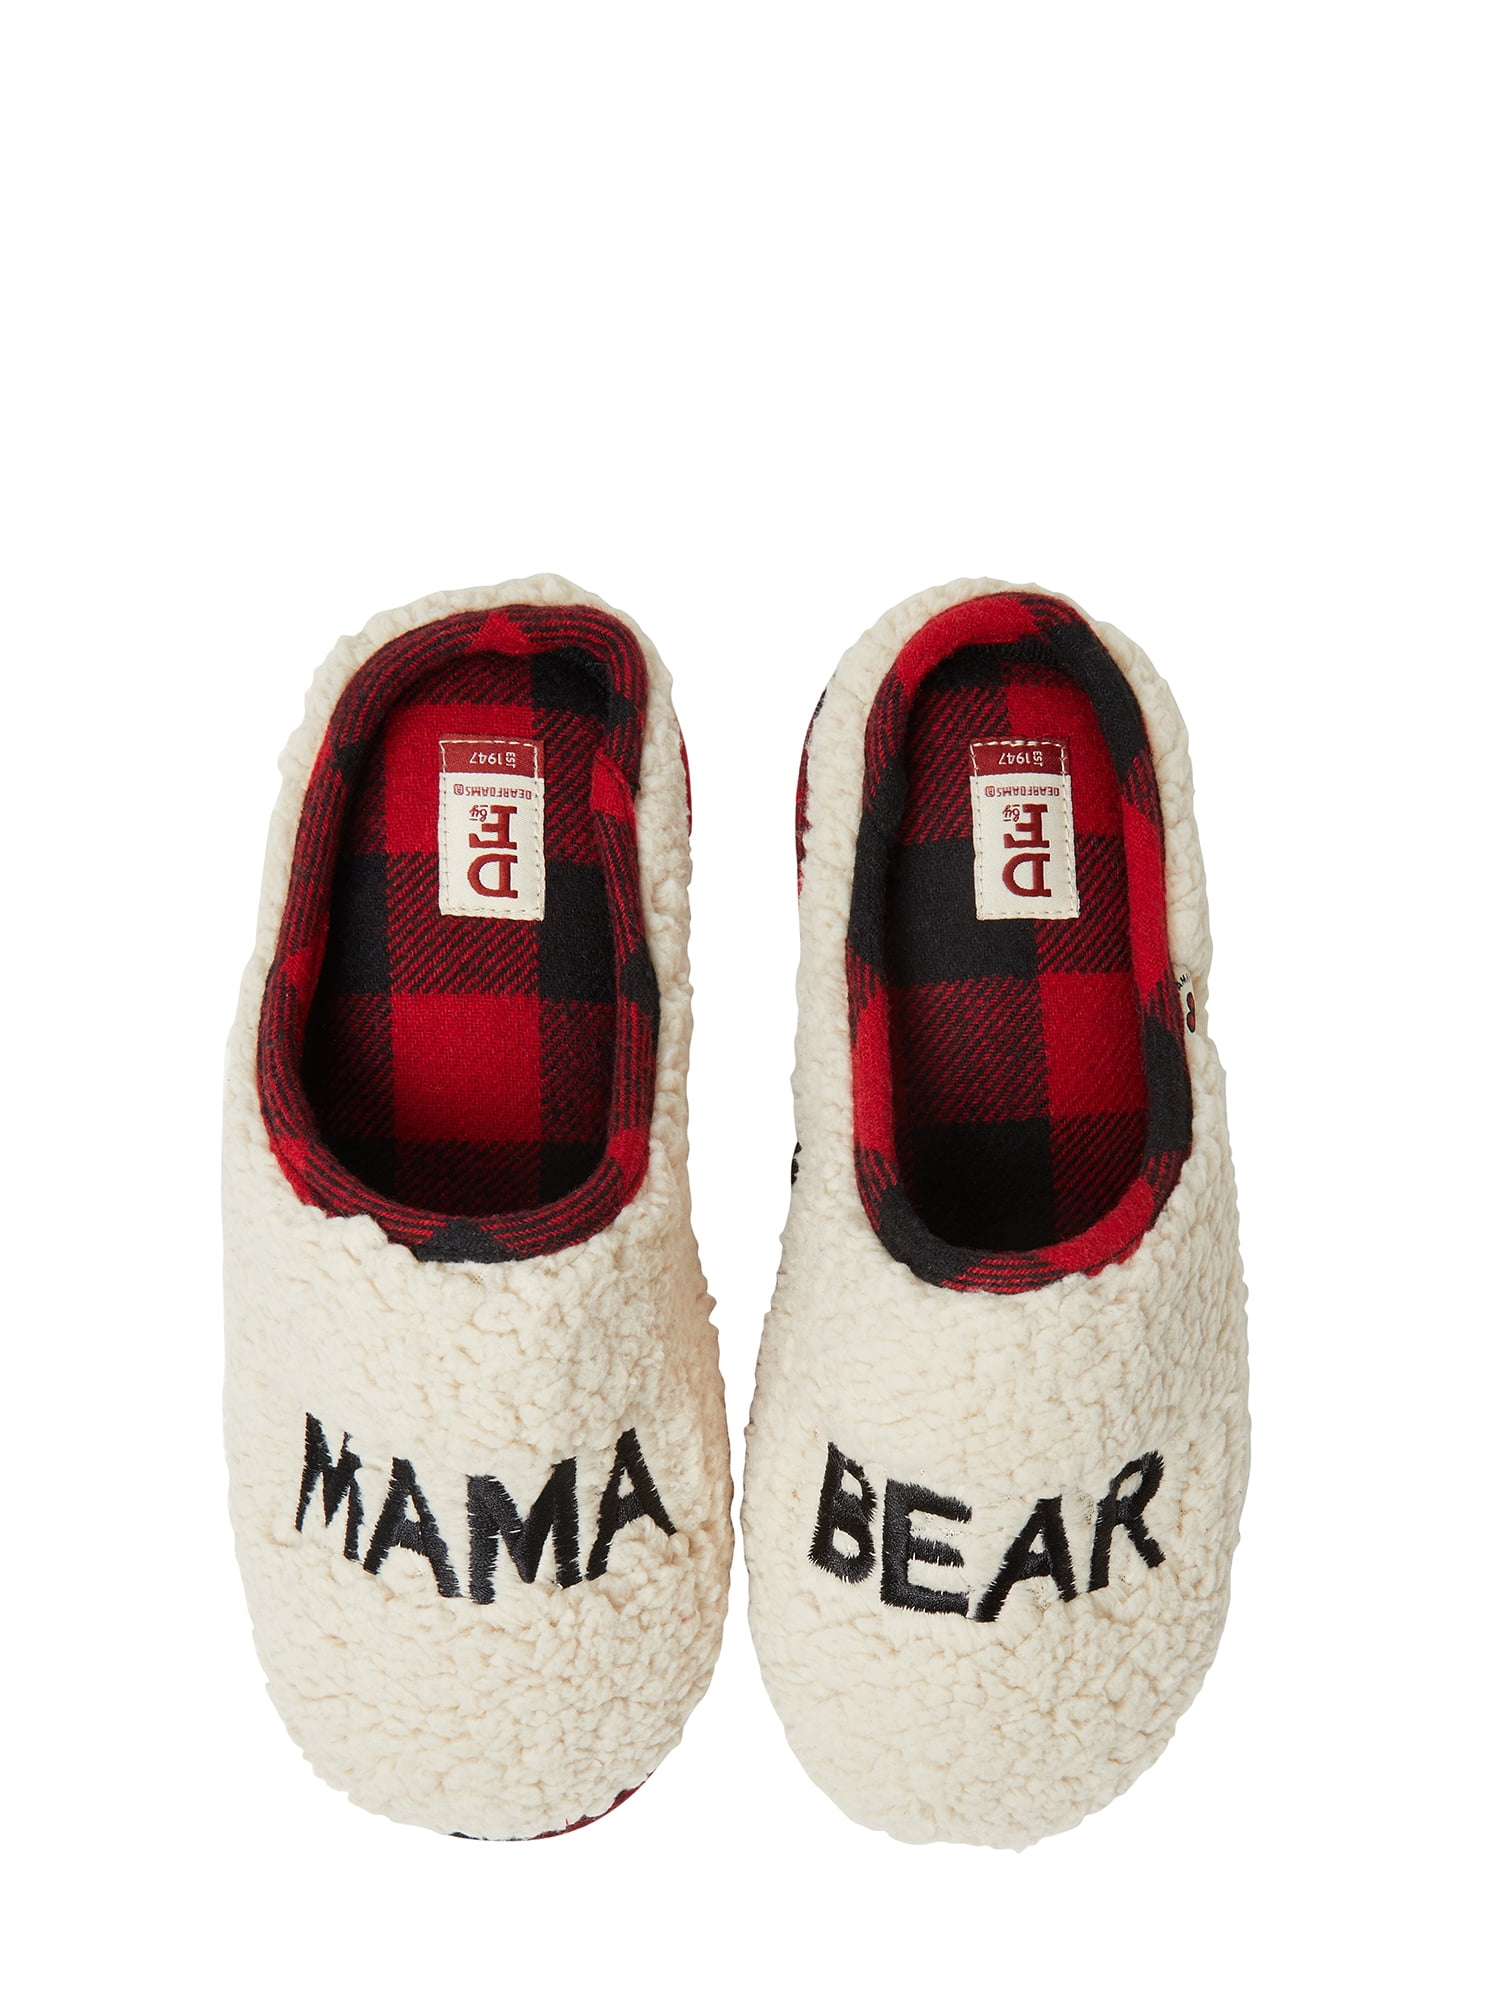 dearfoam slippers at walmart